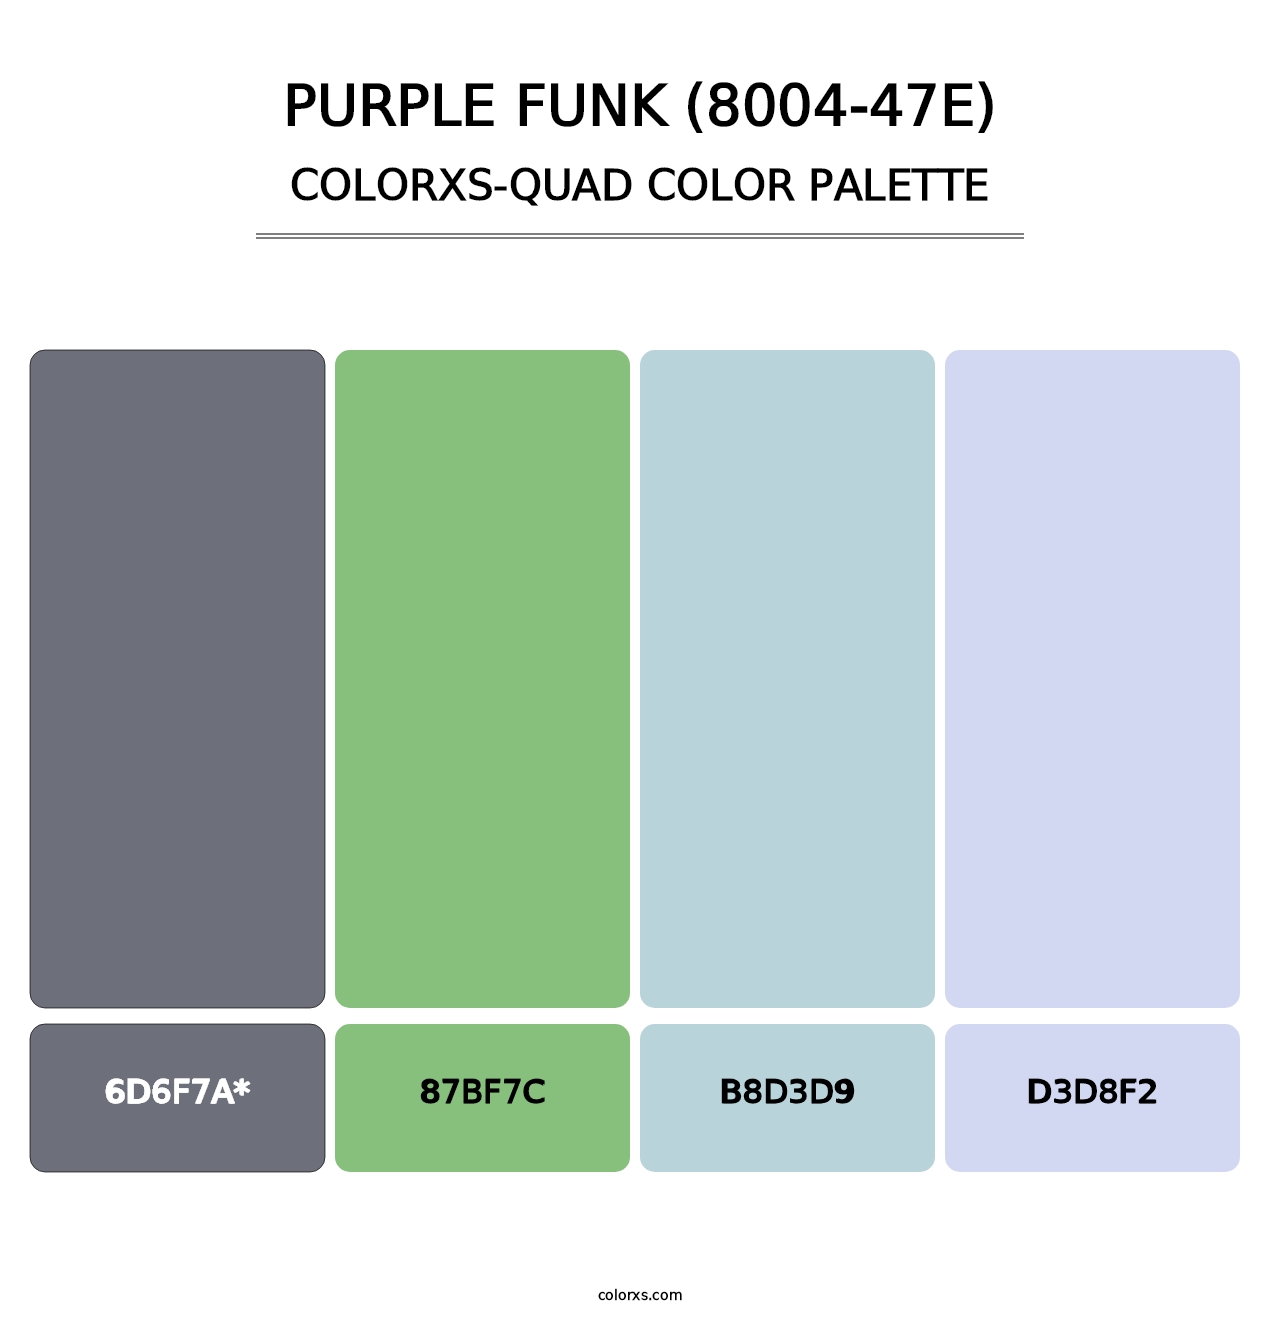 Purple Funk (8004-47E) - Colorxs Quad Palette